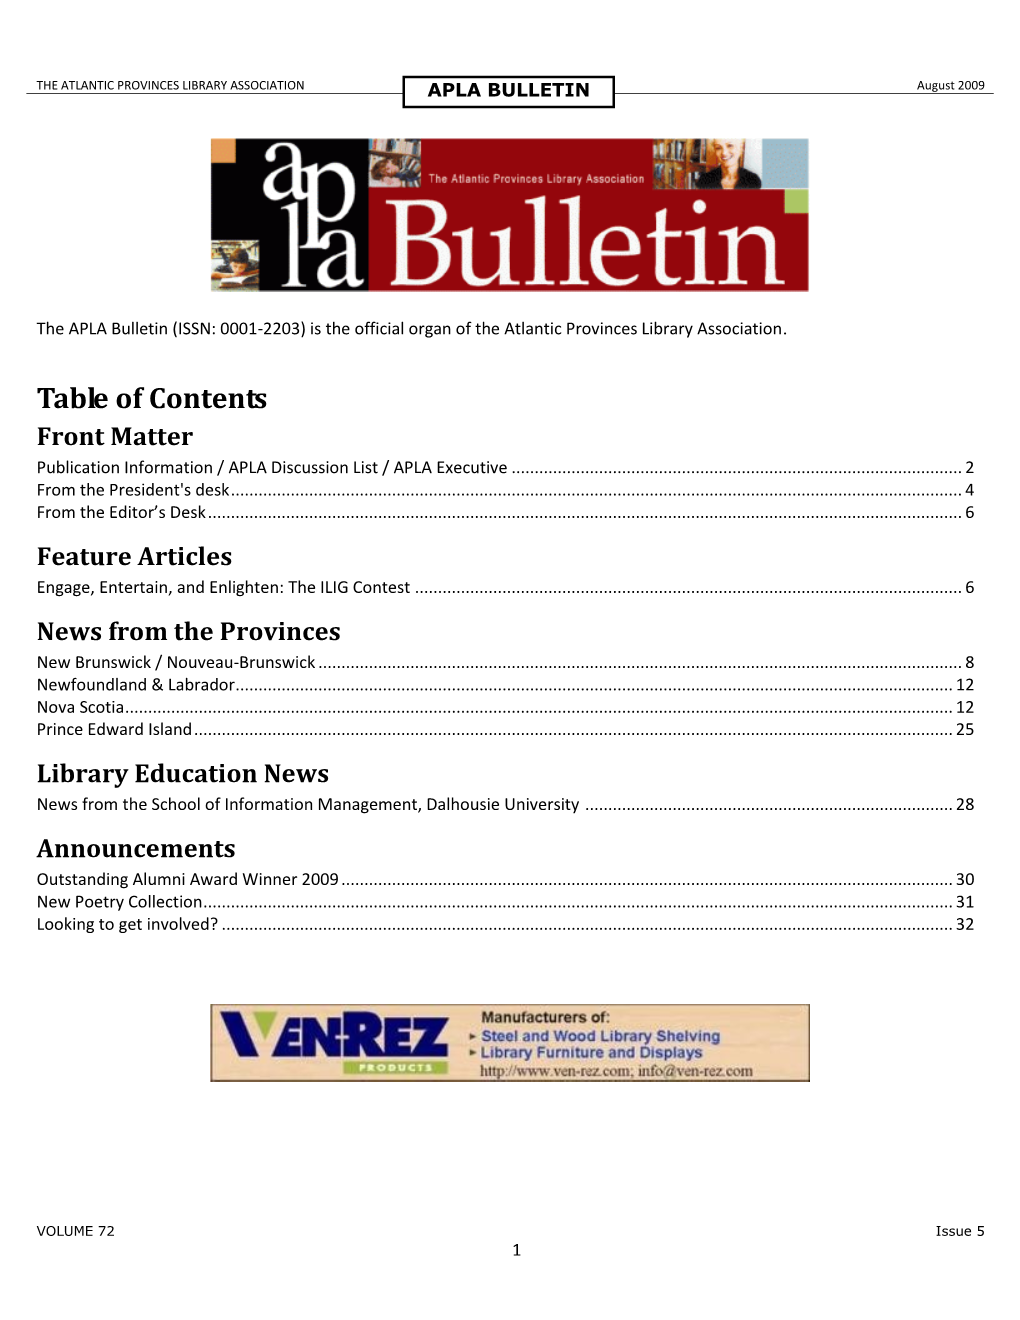 Table of Contents Front Matter Publication Information / APLA Discussion List / APLA Executive